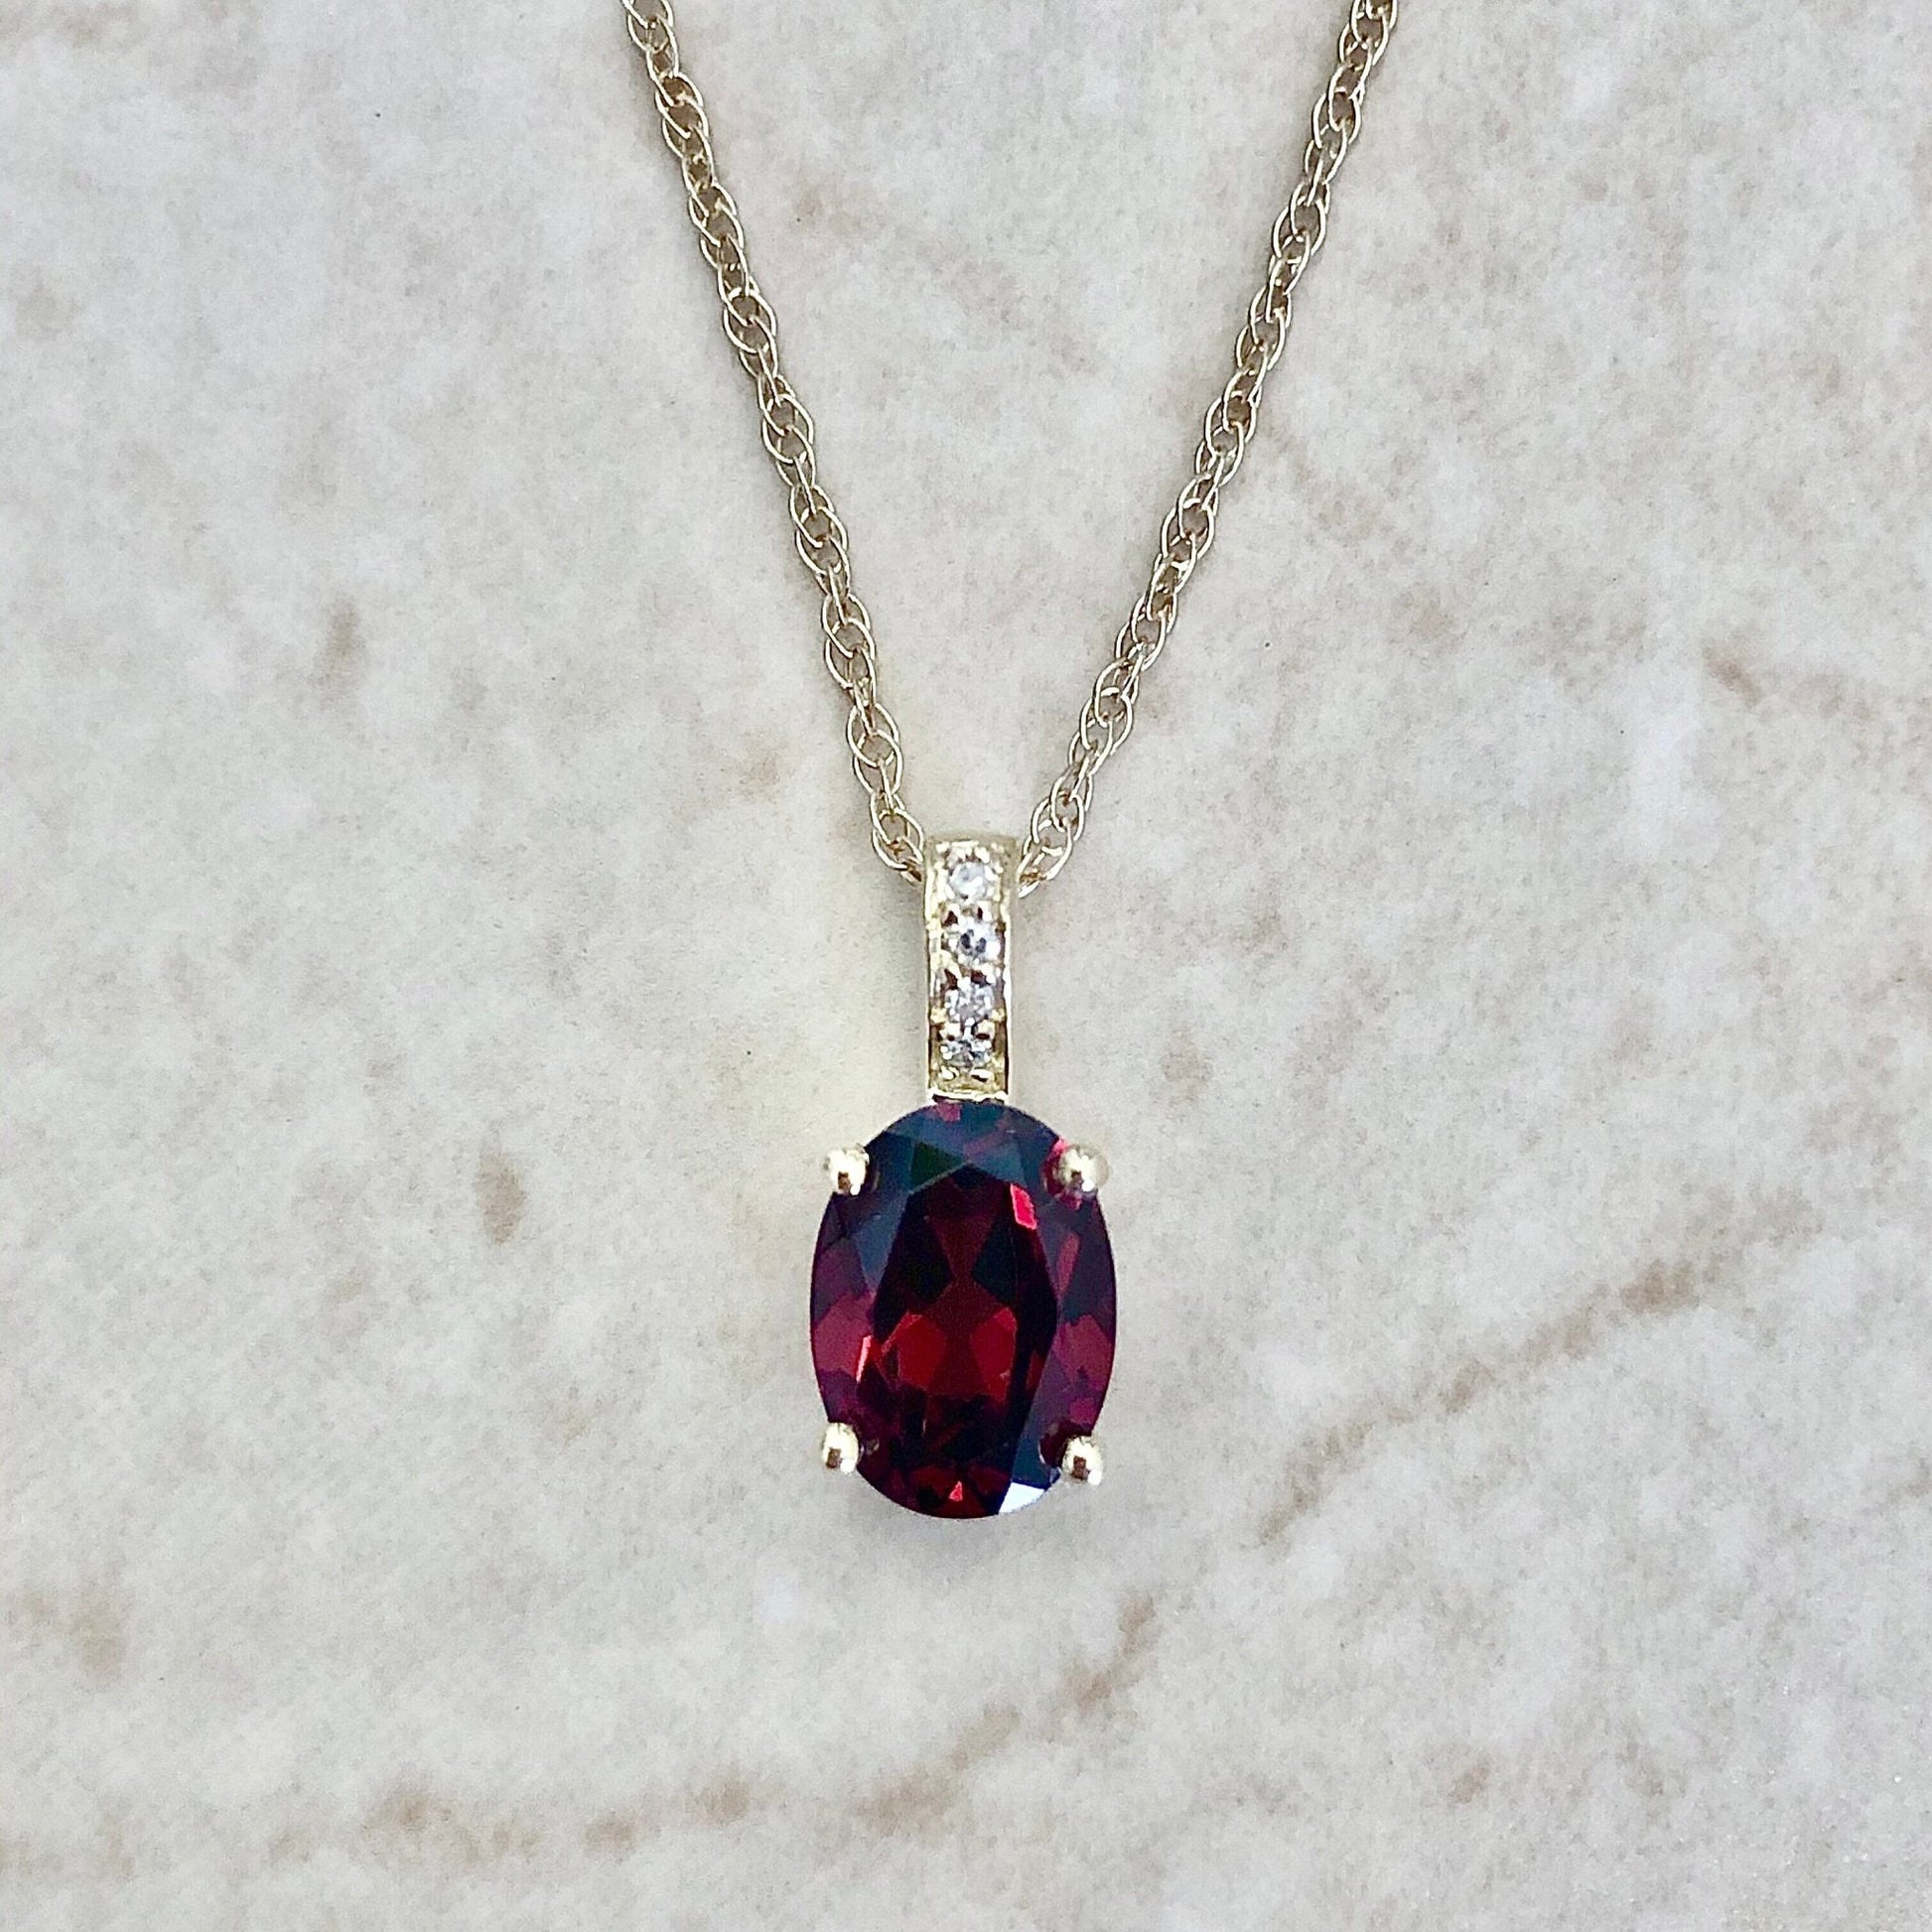 14K Garnet & Diamond Pendant Necklace - Yellow Gold - Oval Garnet January Birthstone - Genuine Gemstone - 18” Chain - Birthday Gift